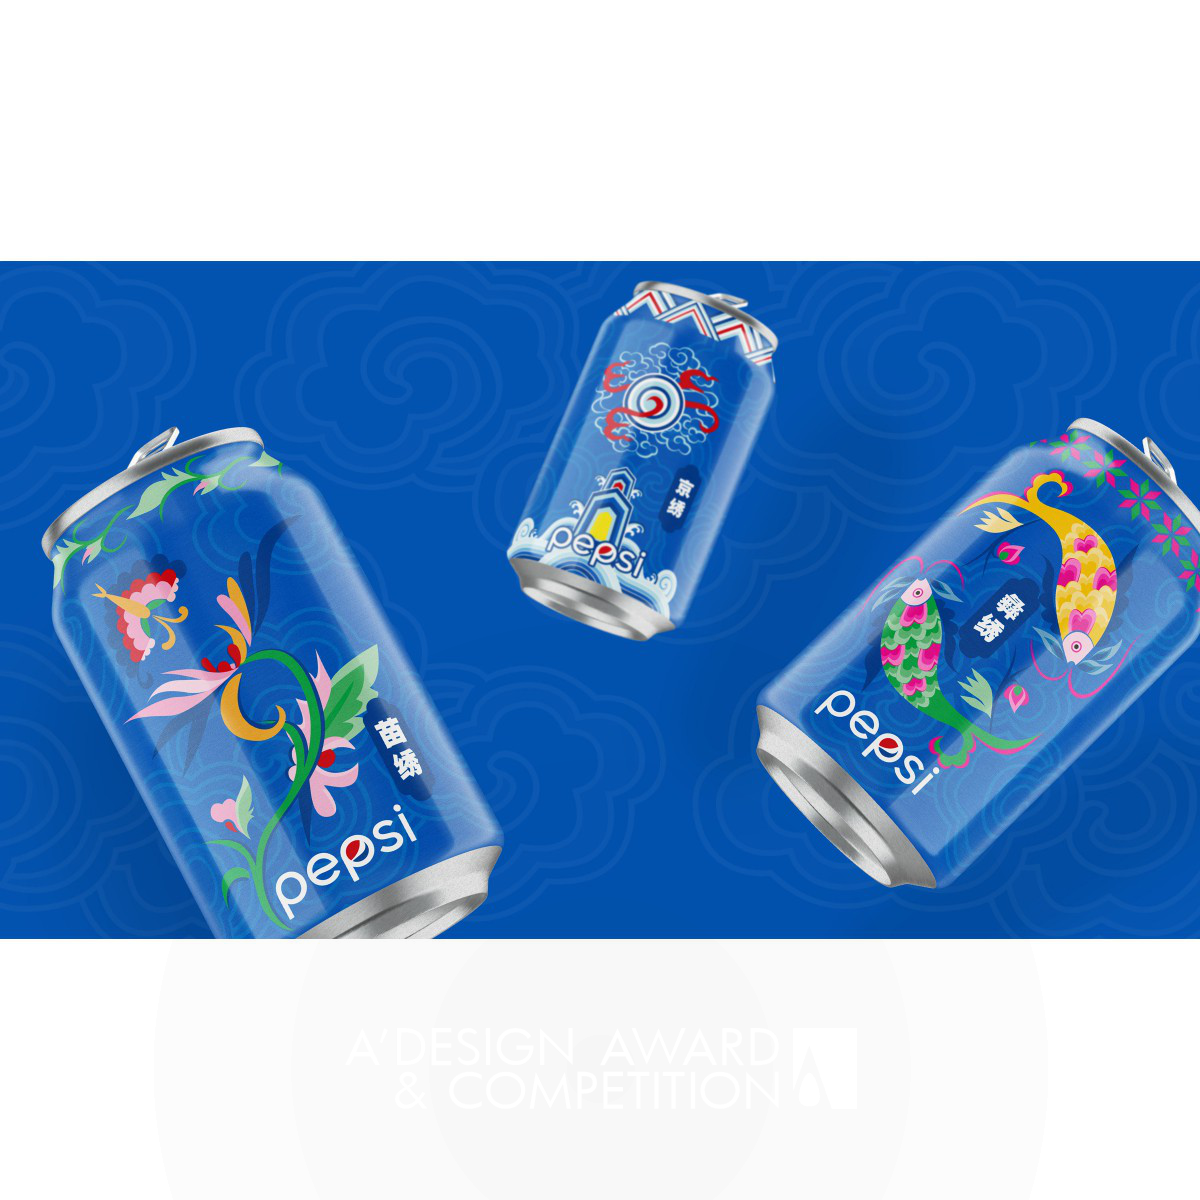 Pepsi Mom Handworks Beverage by PepsiCo Design and Innovation